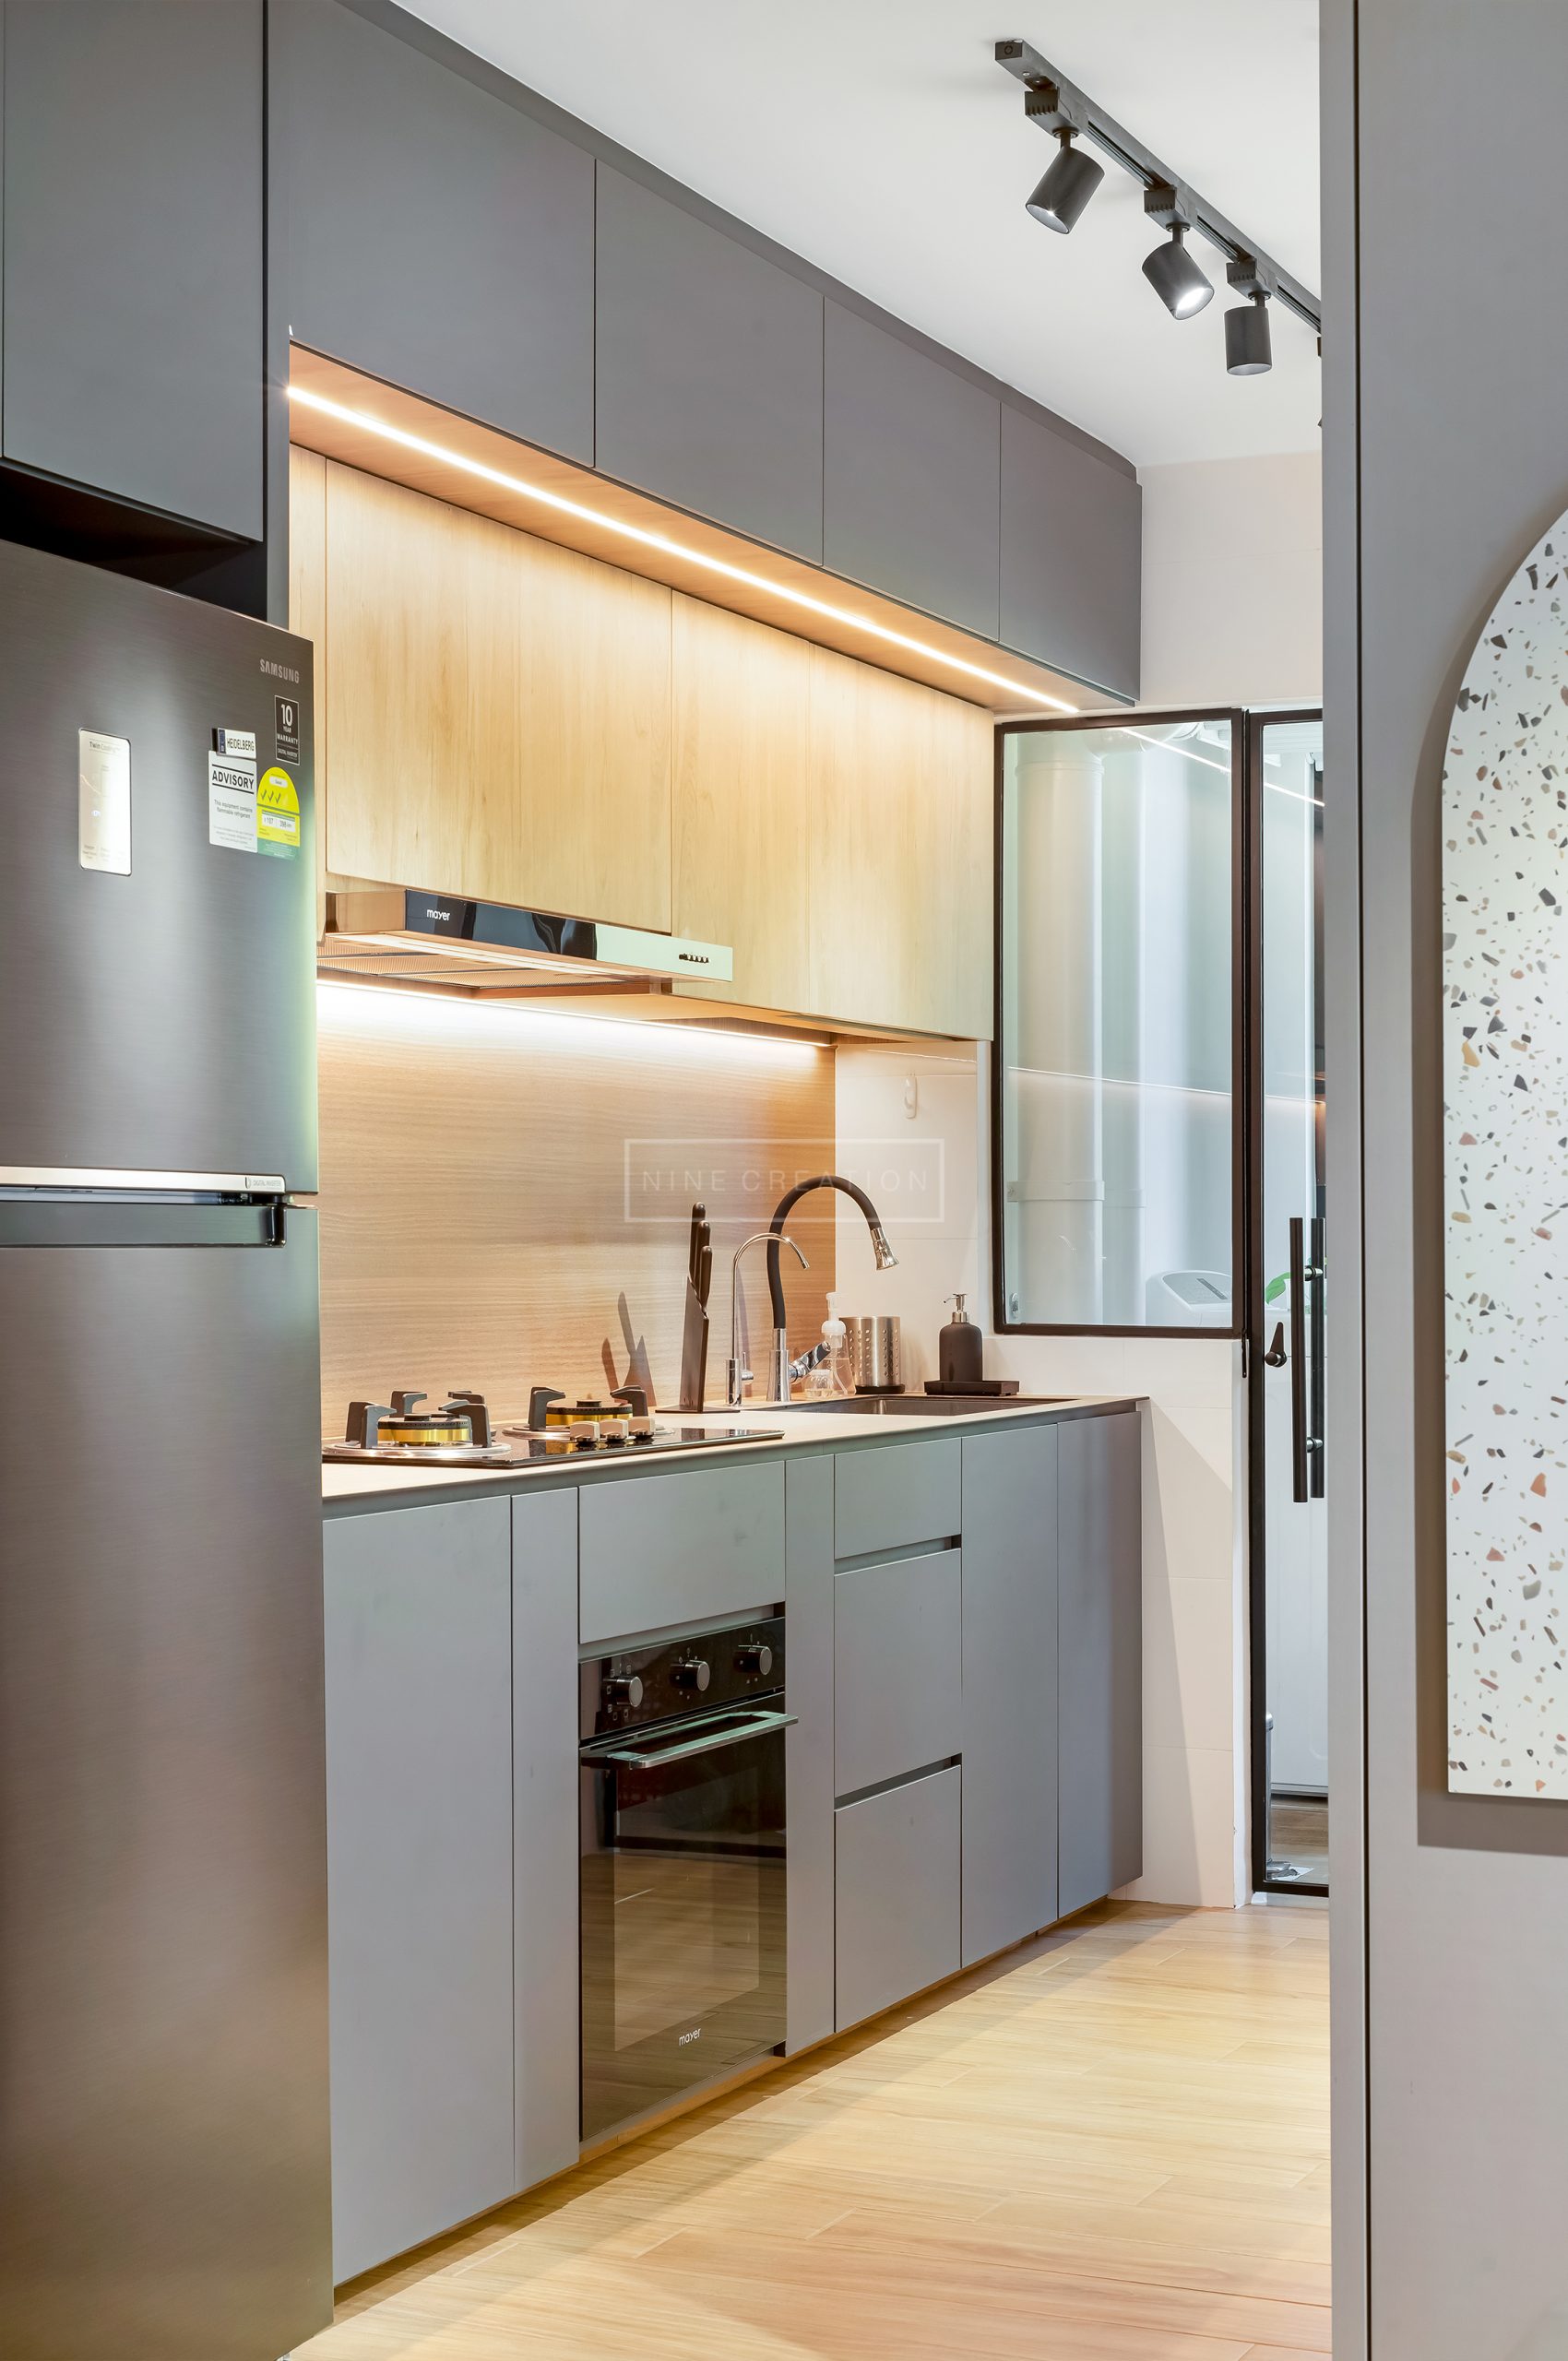 10 Stunning Ideas For Your Hdb Kitchen Design Singapore 9creation